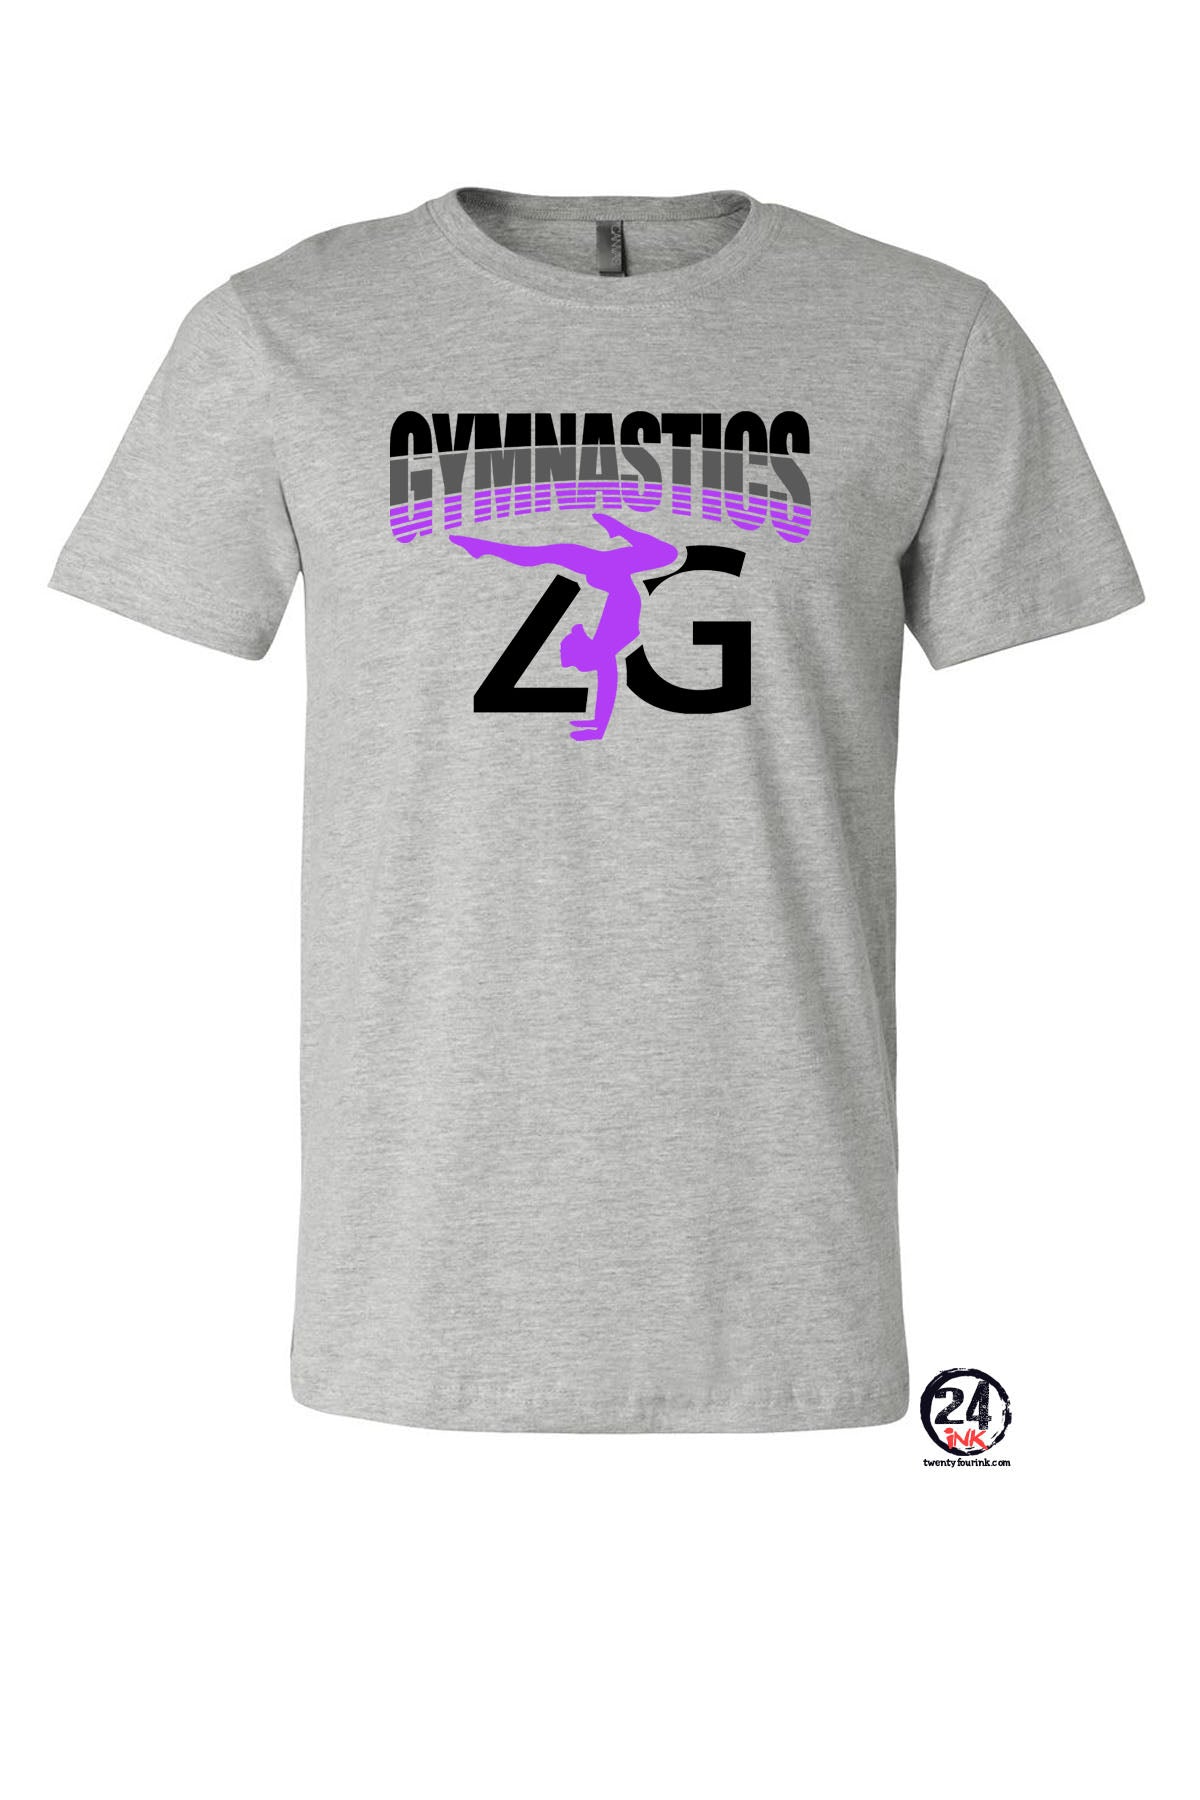 ZG Gymnastics T-Shirt